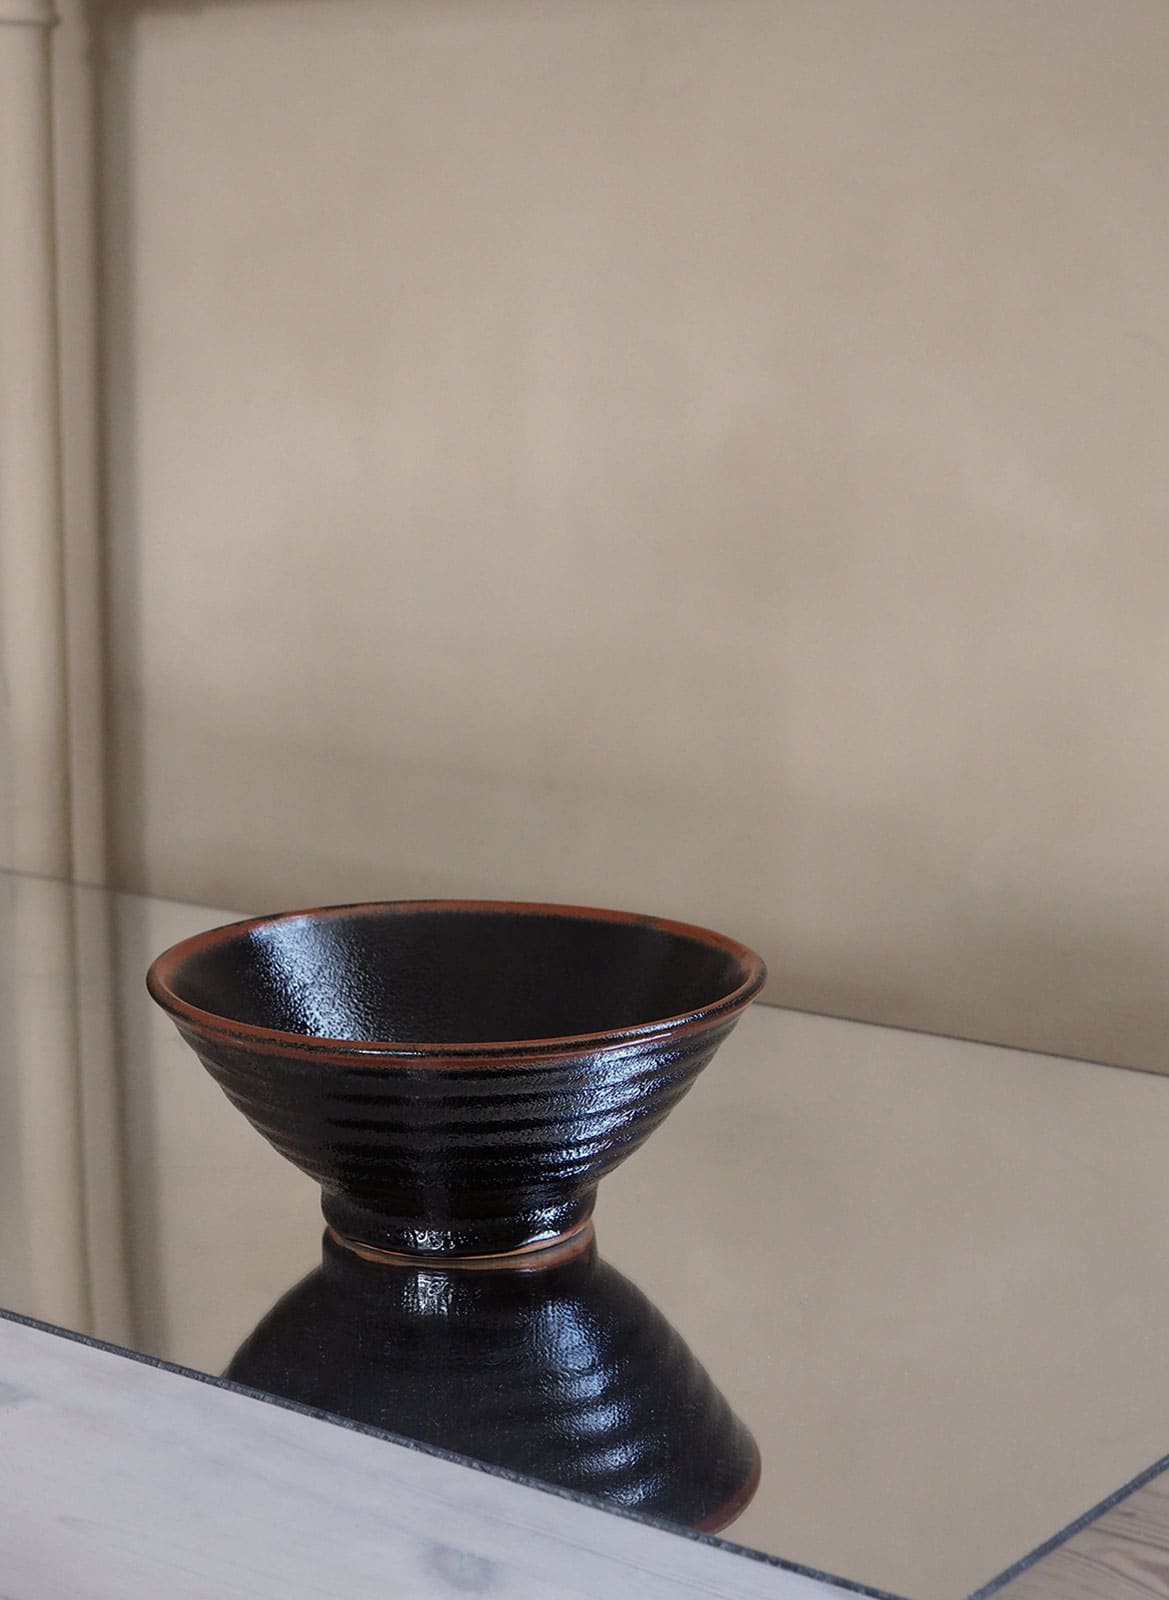 vintage black Japanese ceramic bowl with a brown edge